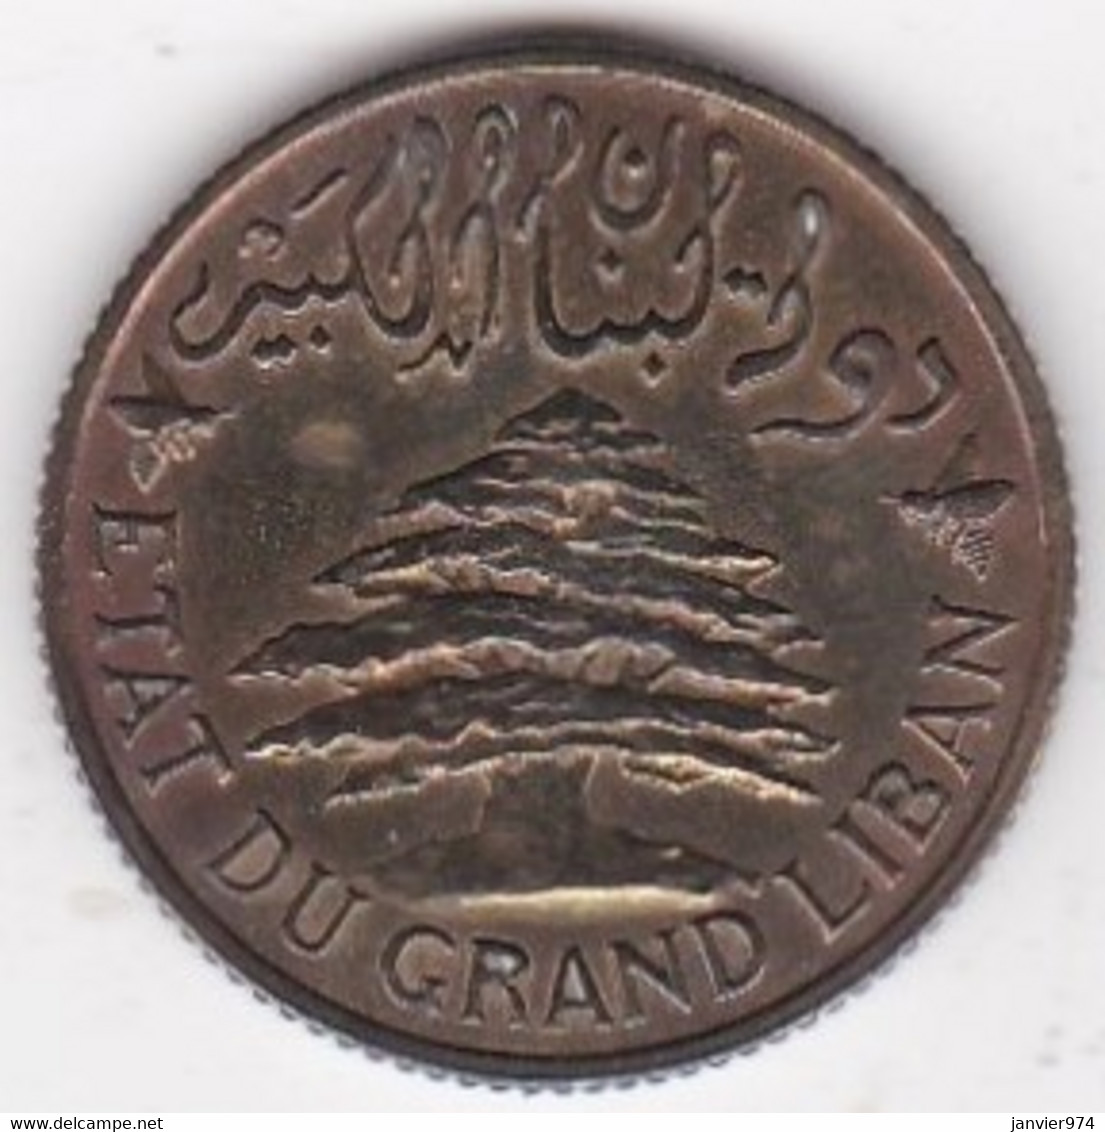 Etat Du Grand Liban 5 Piastres 1925 , En Bronze, KM# 5 – Lec# 26 - Lebanon